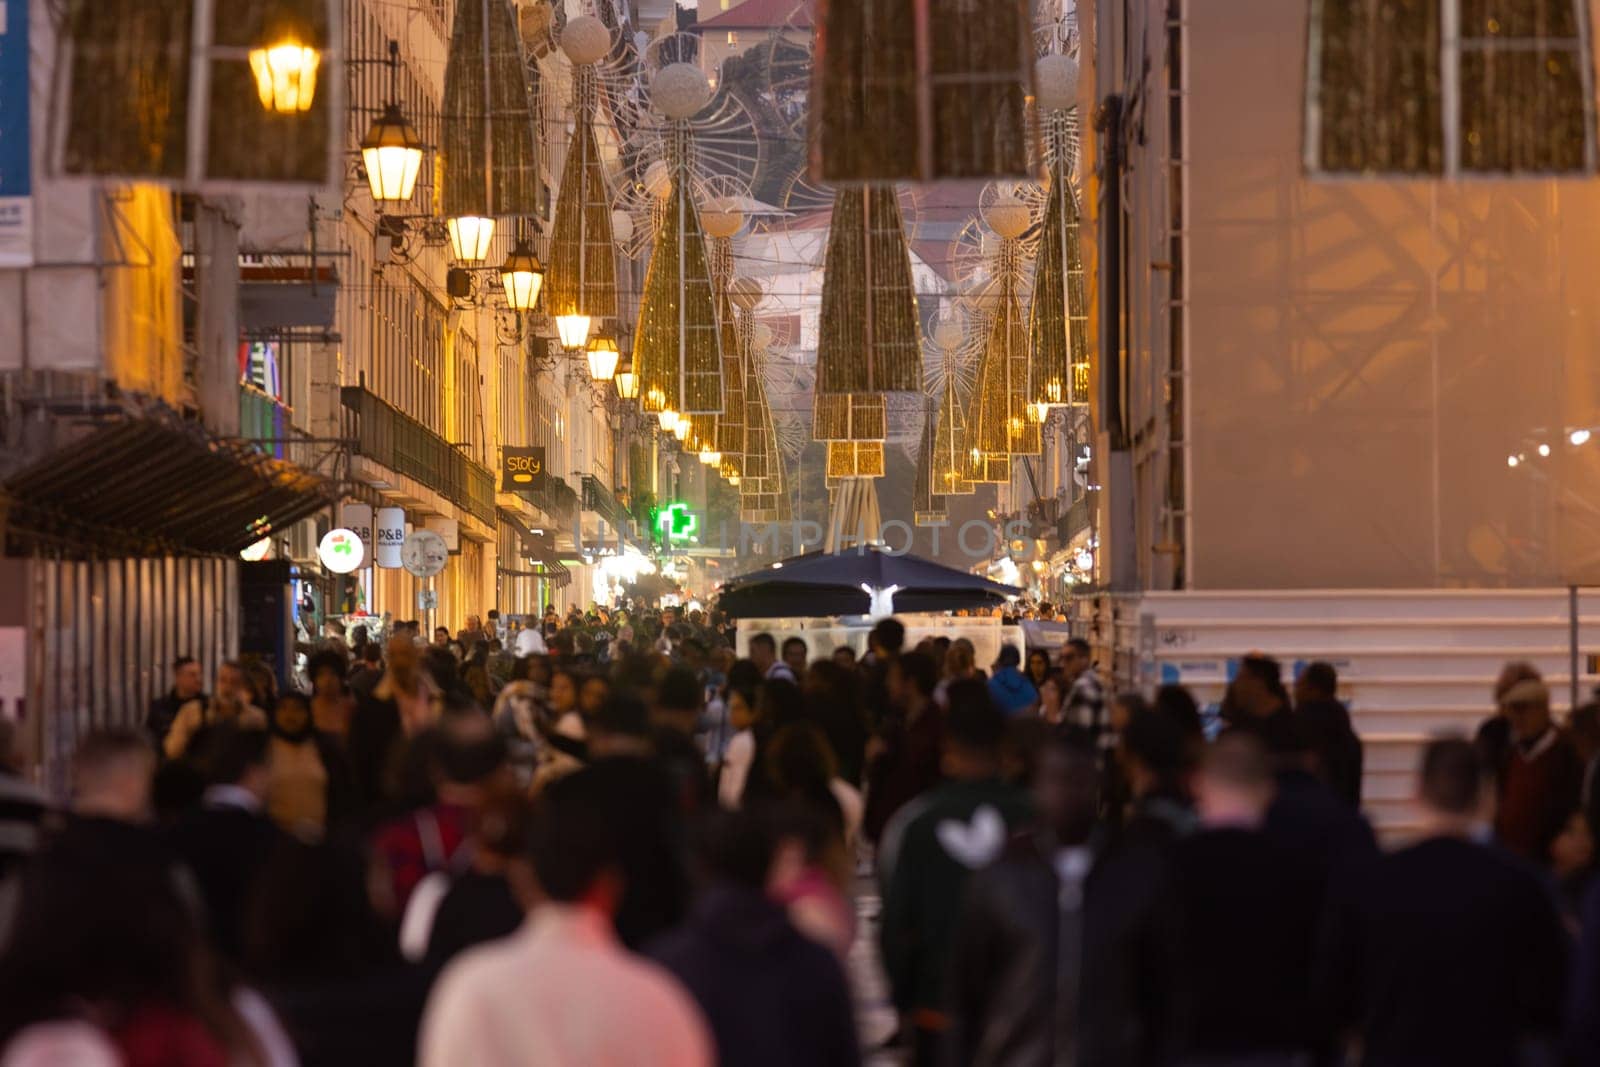 A crowd of people walking down a street Rua Agusta - telephoto